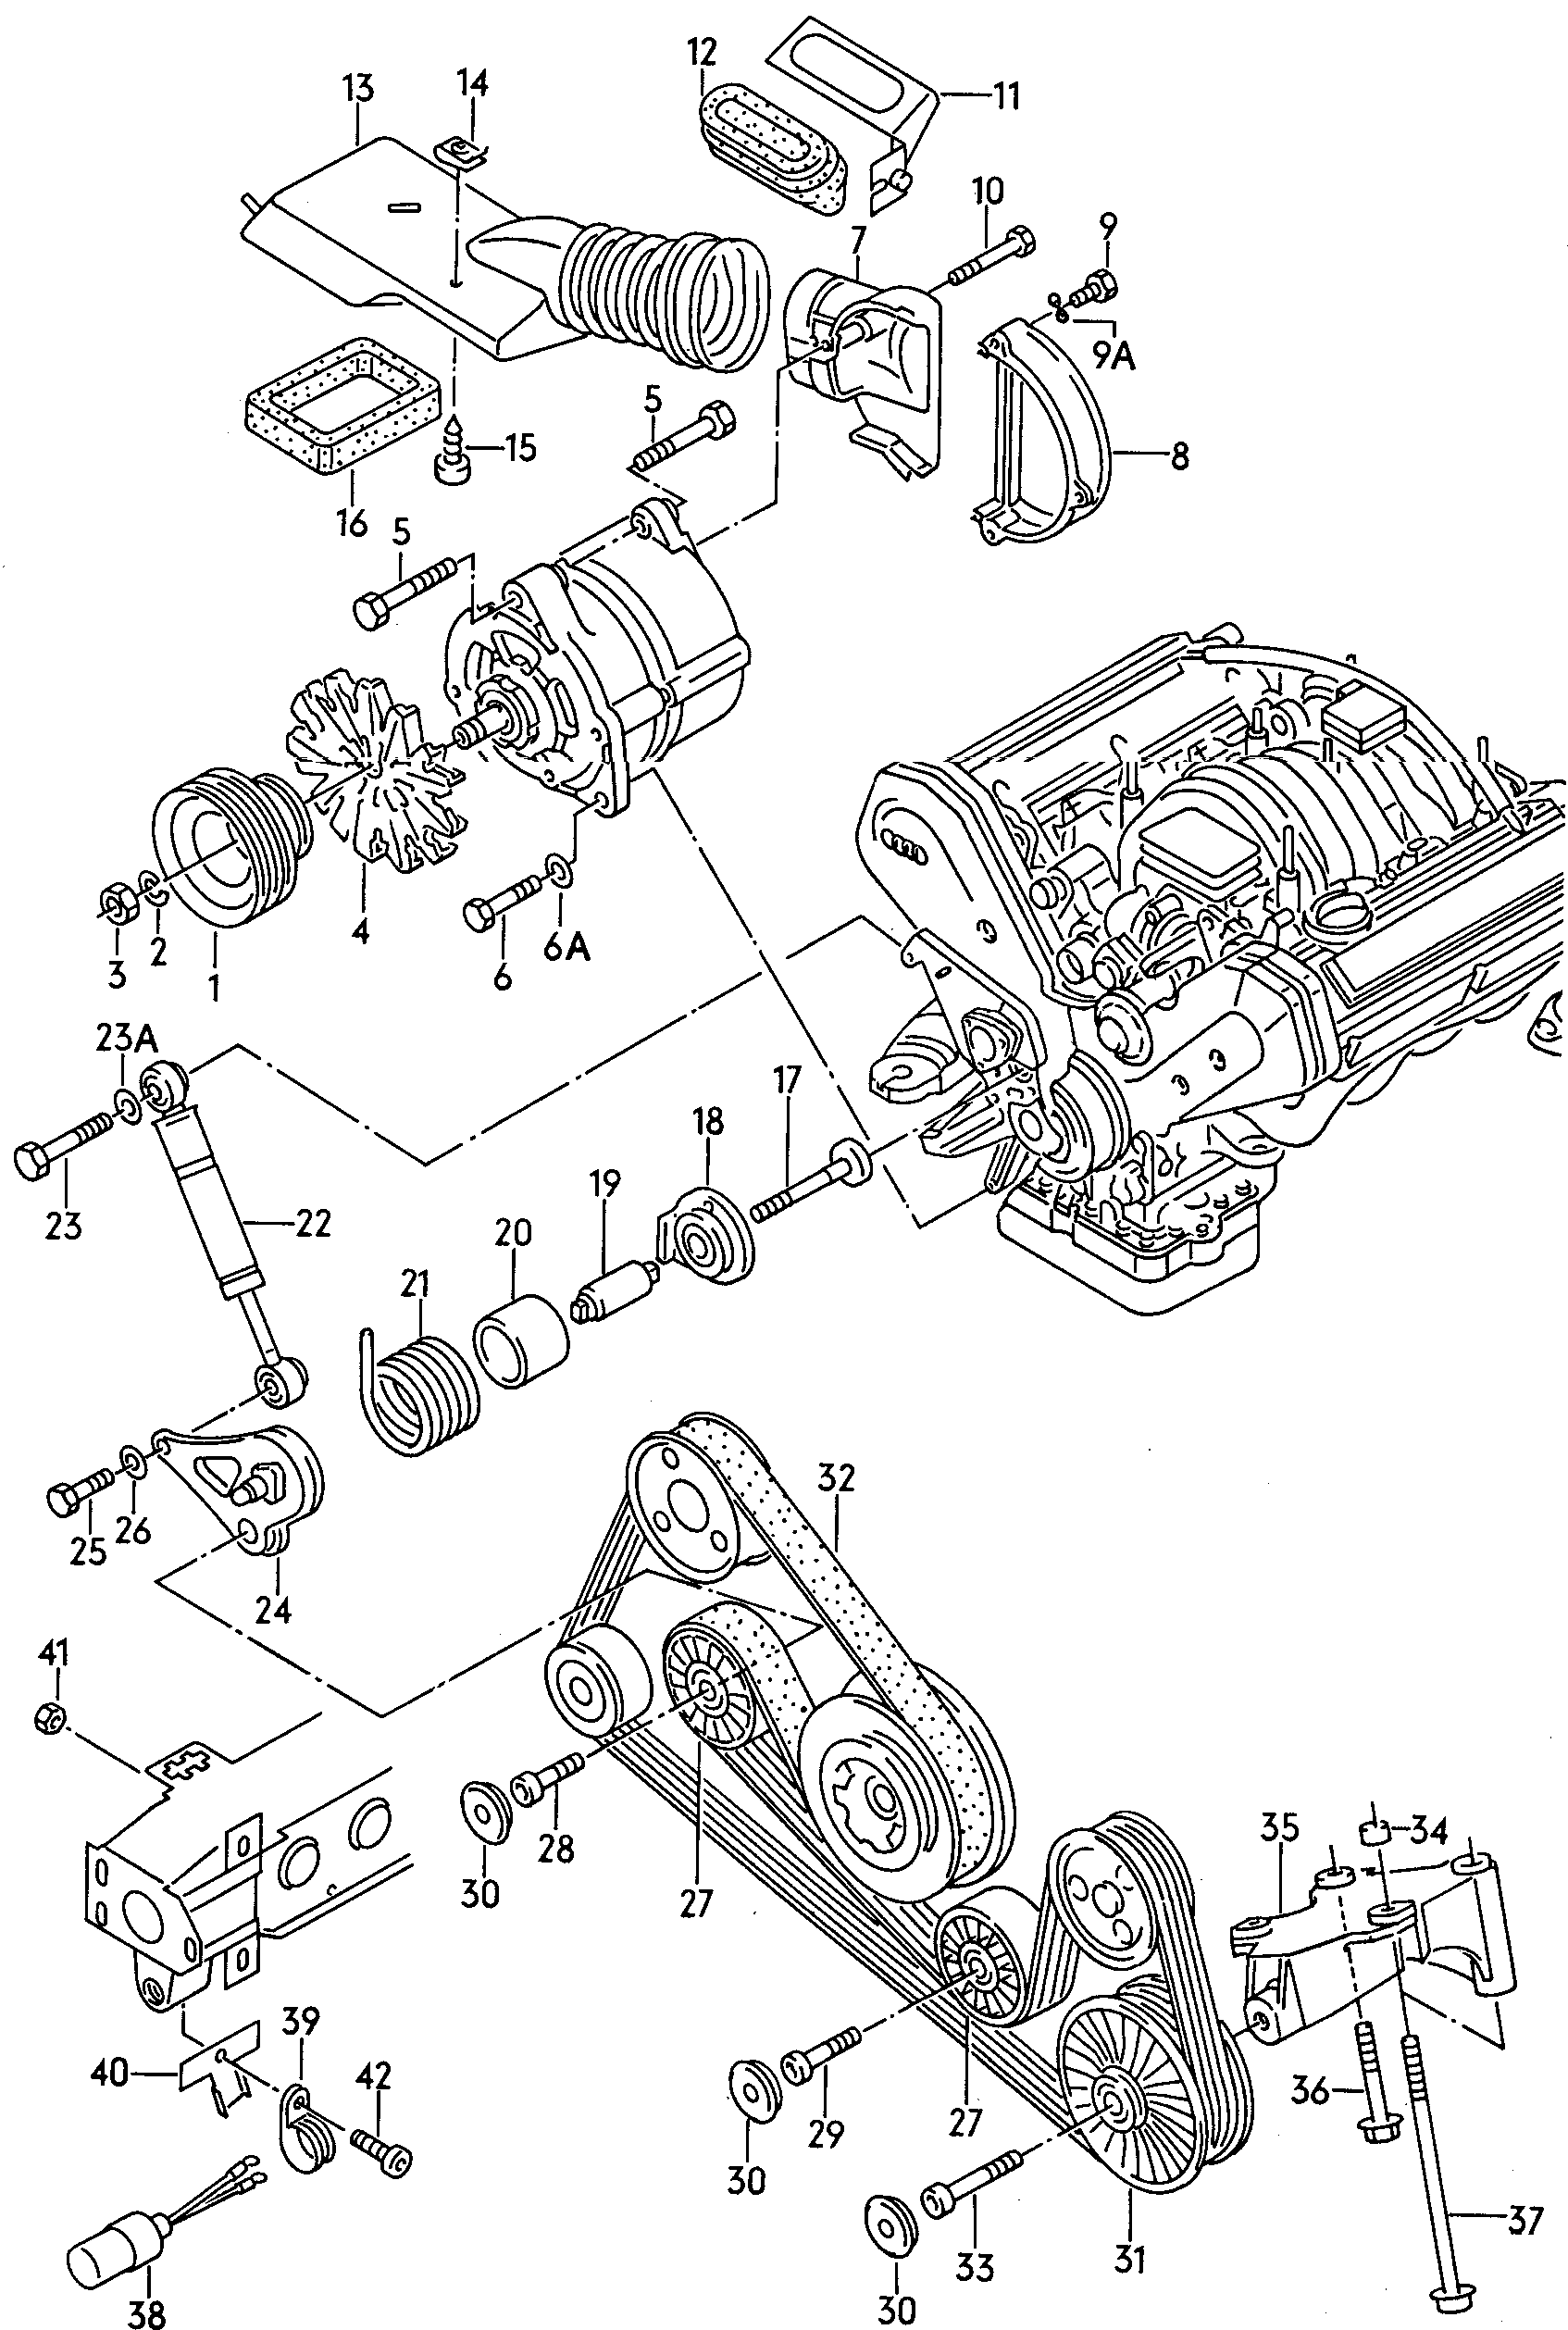 elementy polaczeniowe i
mocujace alternatora; rol... - Audi A8/S8 quattro(A8Q)  